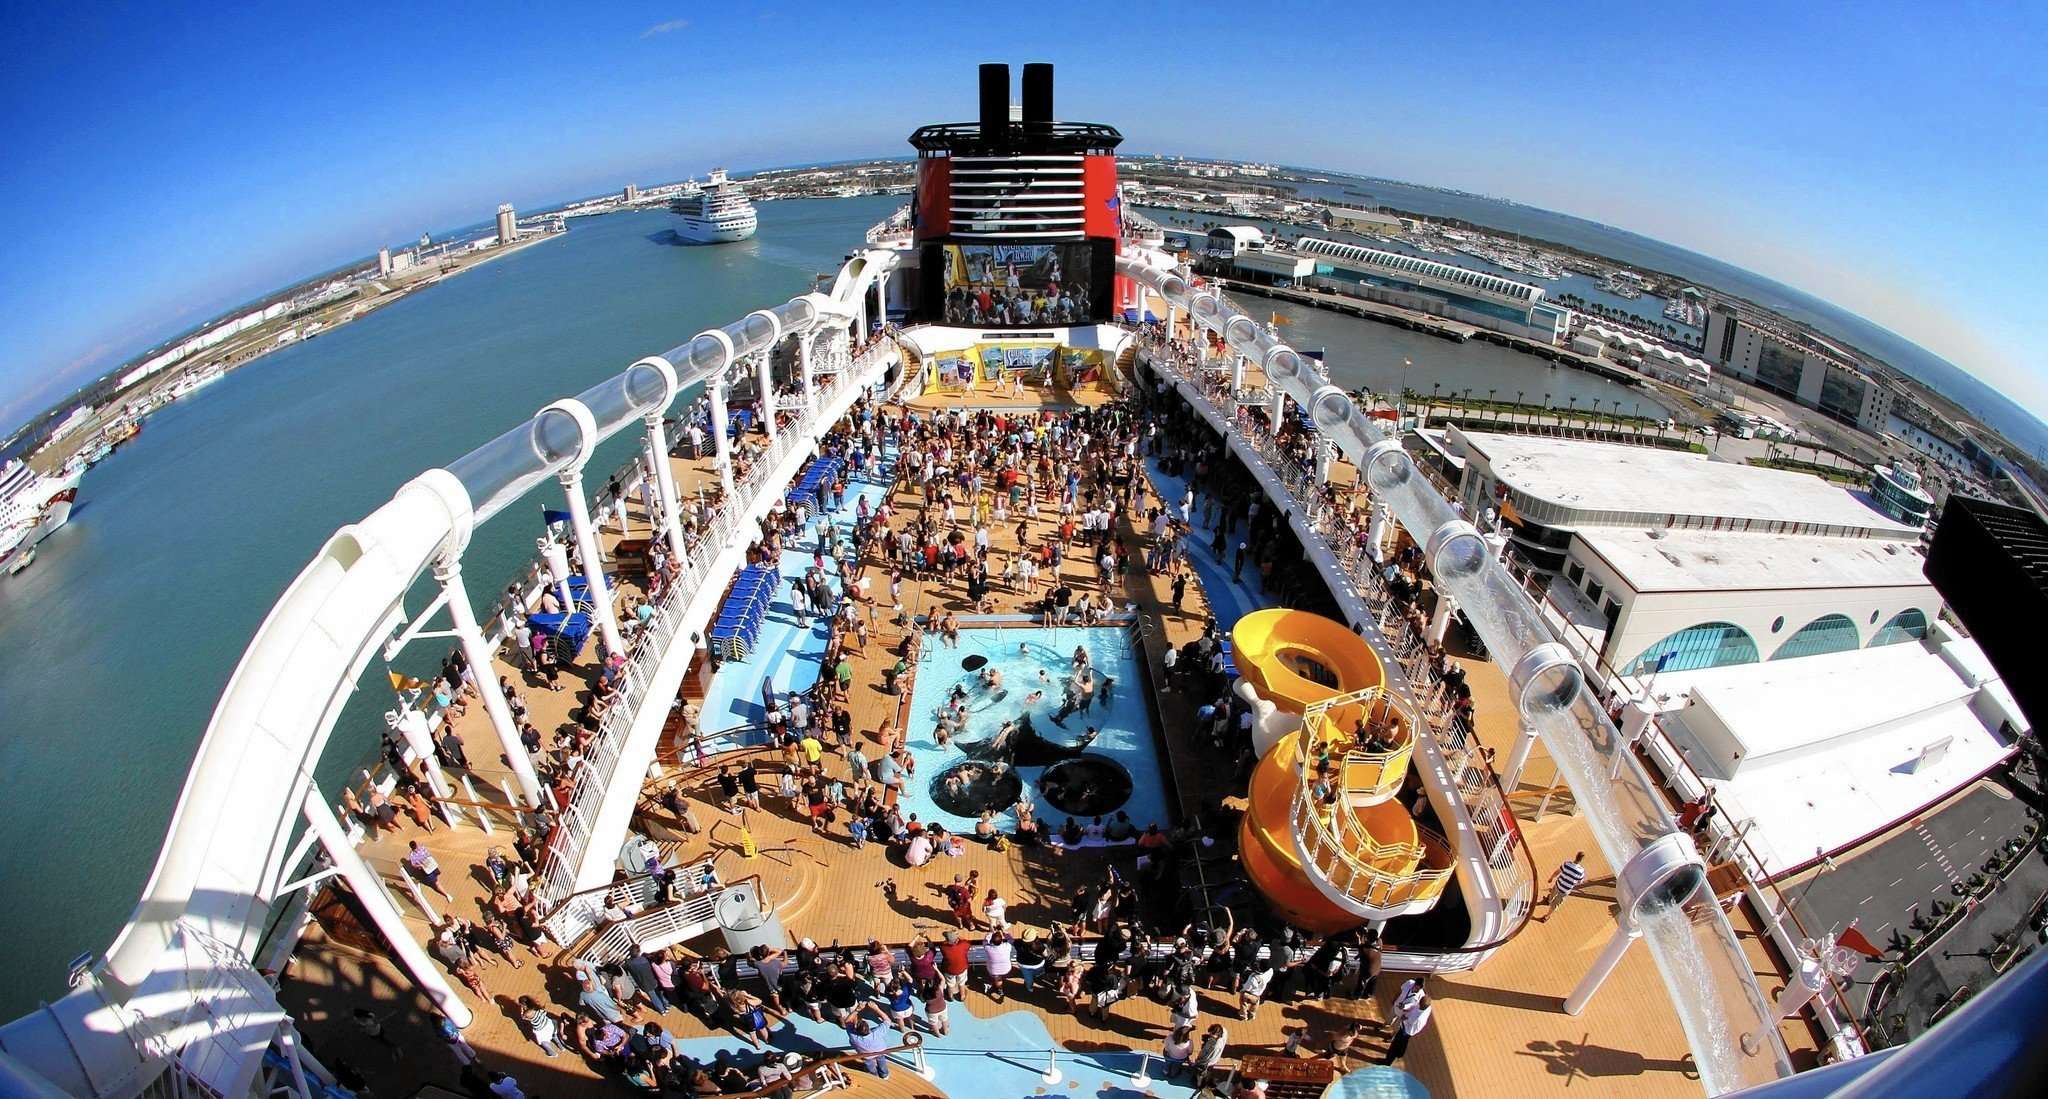 Disney Cruise Line announces fall 2020 deployment